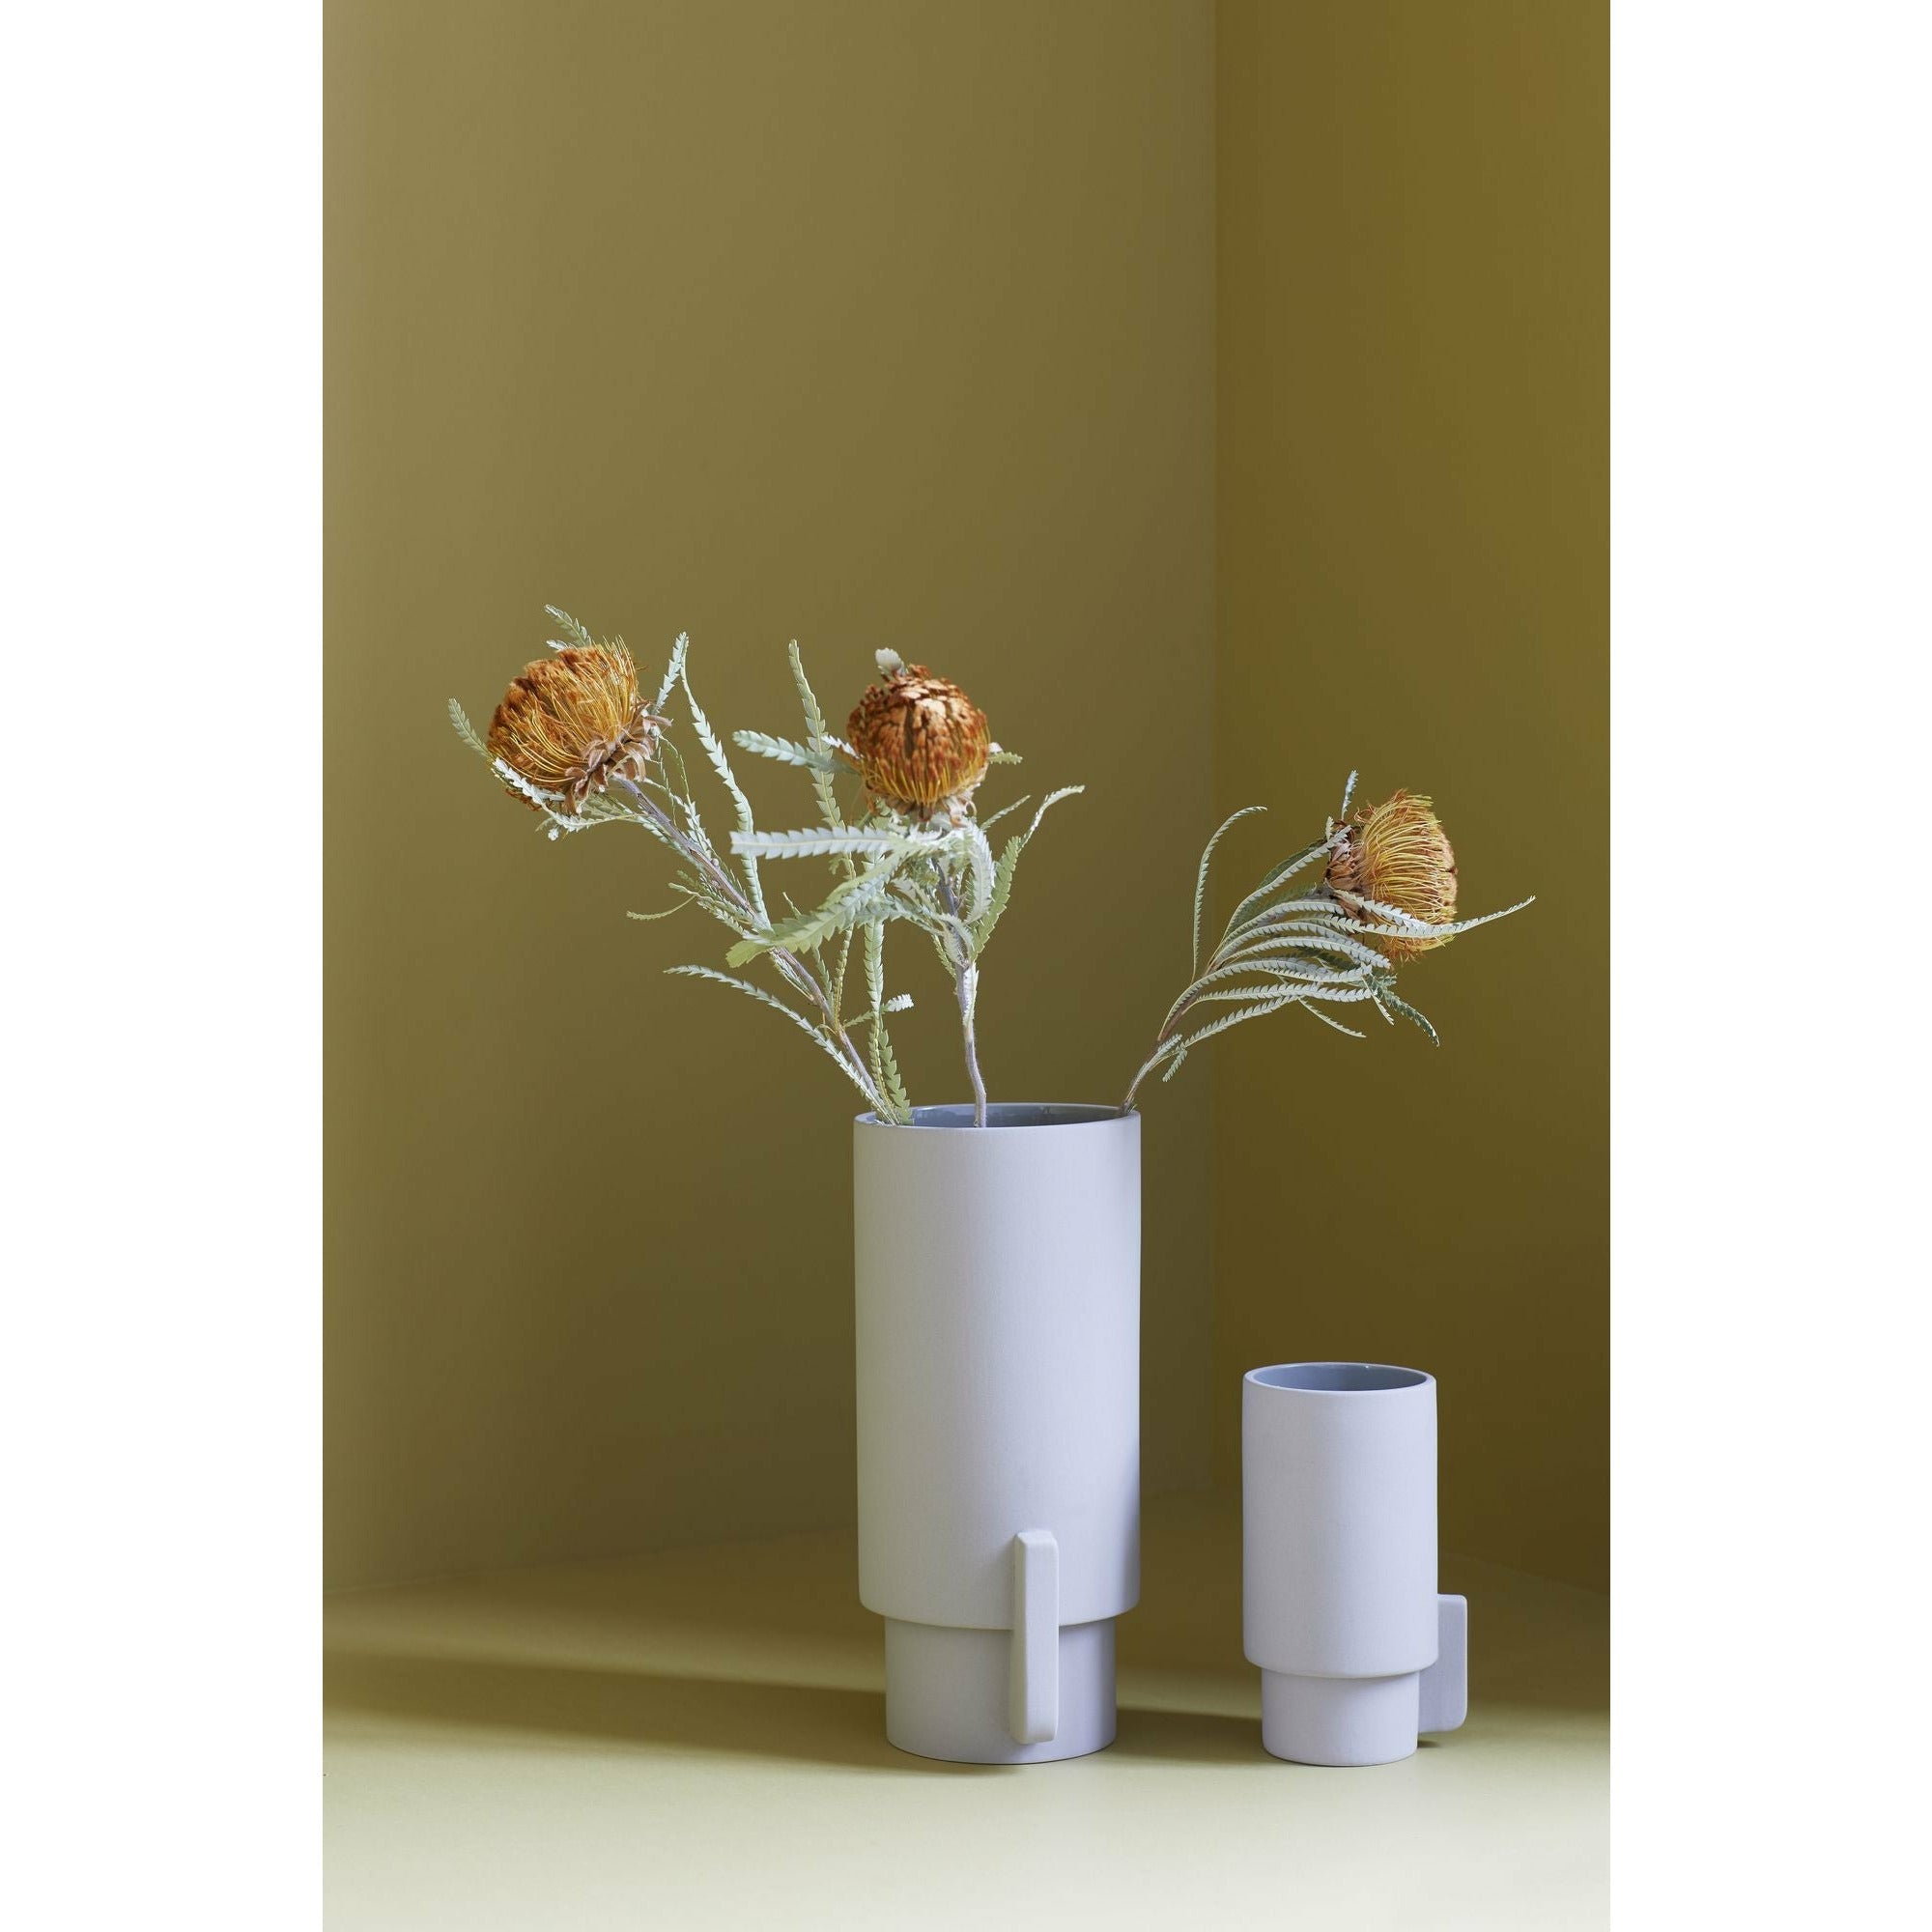 Form & Refine Alcoa Vase Small. Light Grey